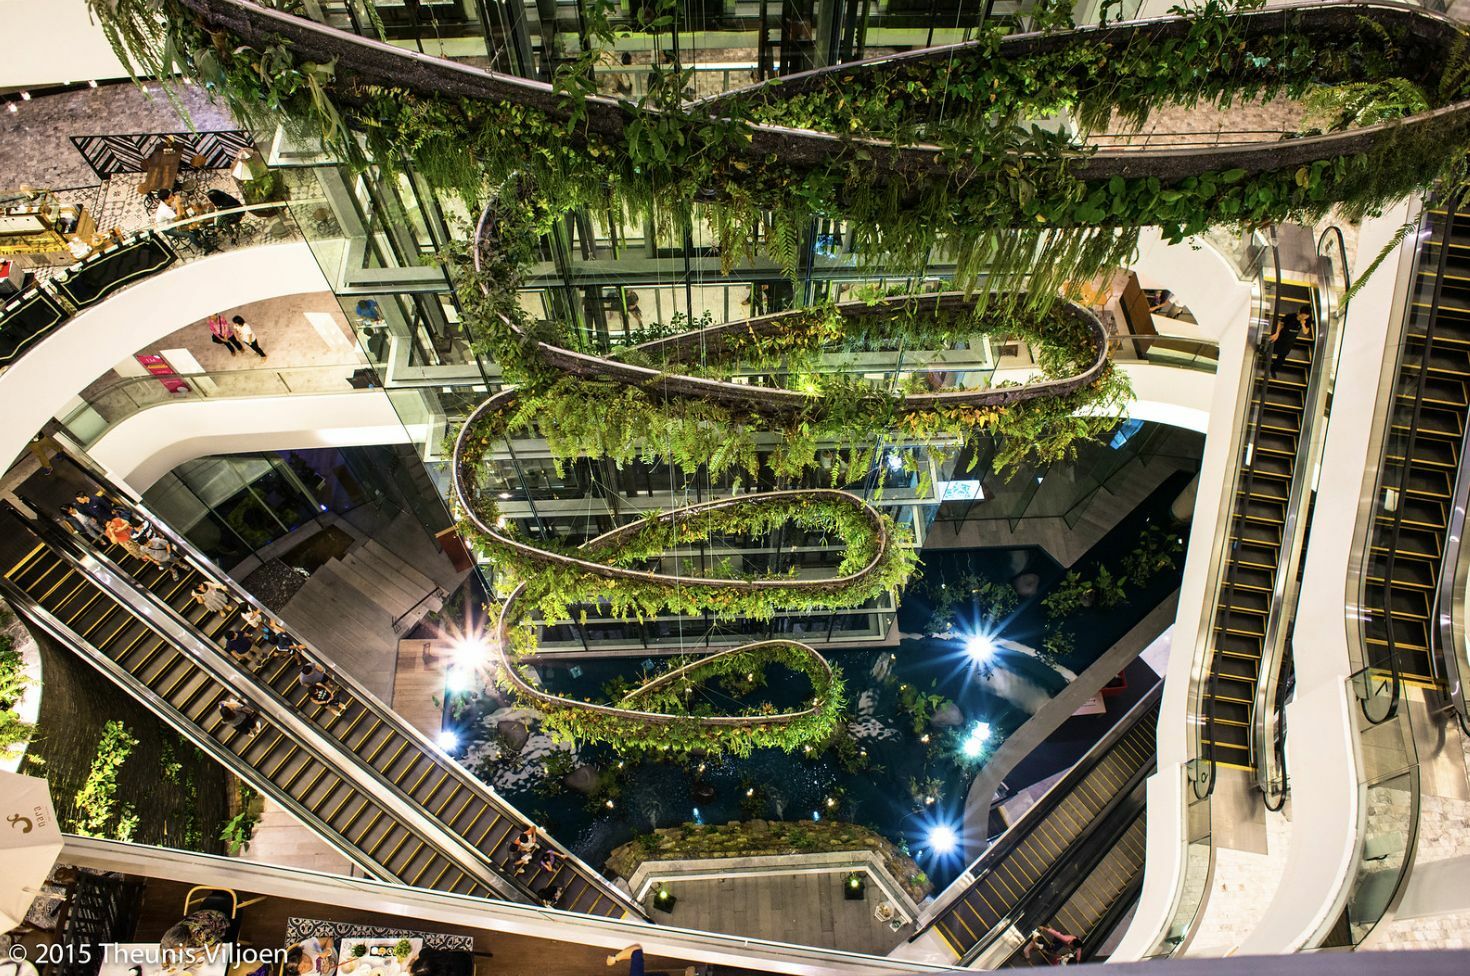 Green vertical interior design of Emquartier shopping mall dining